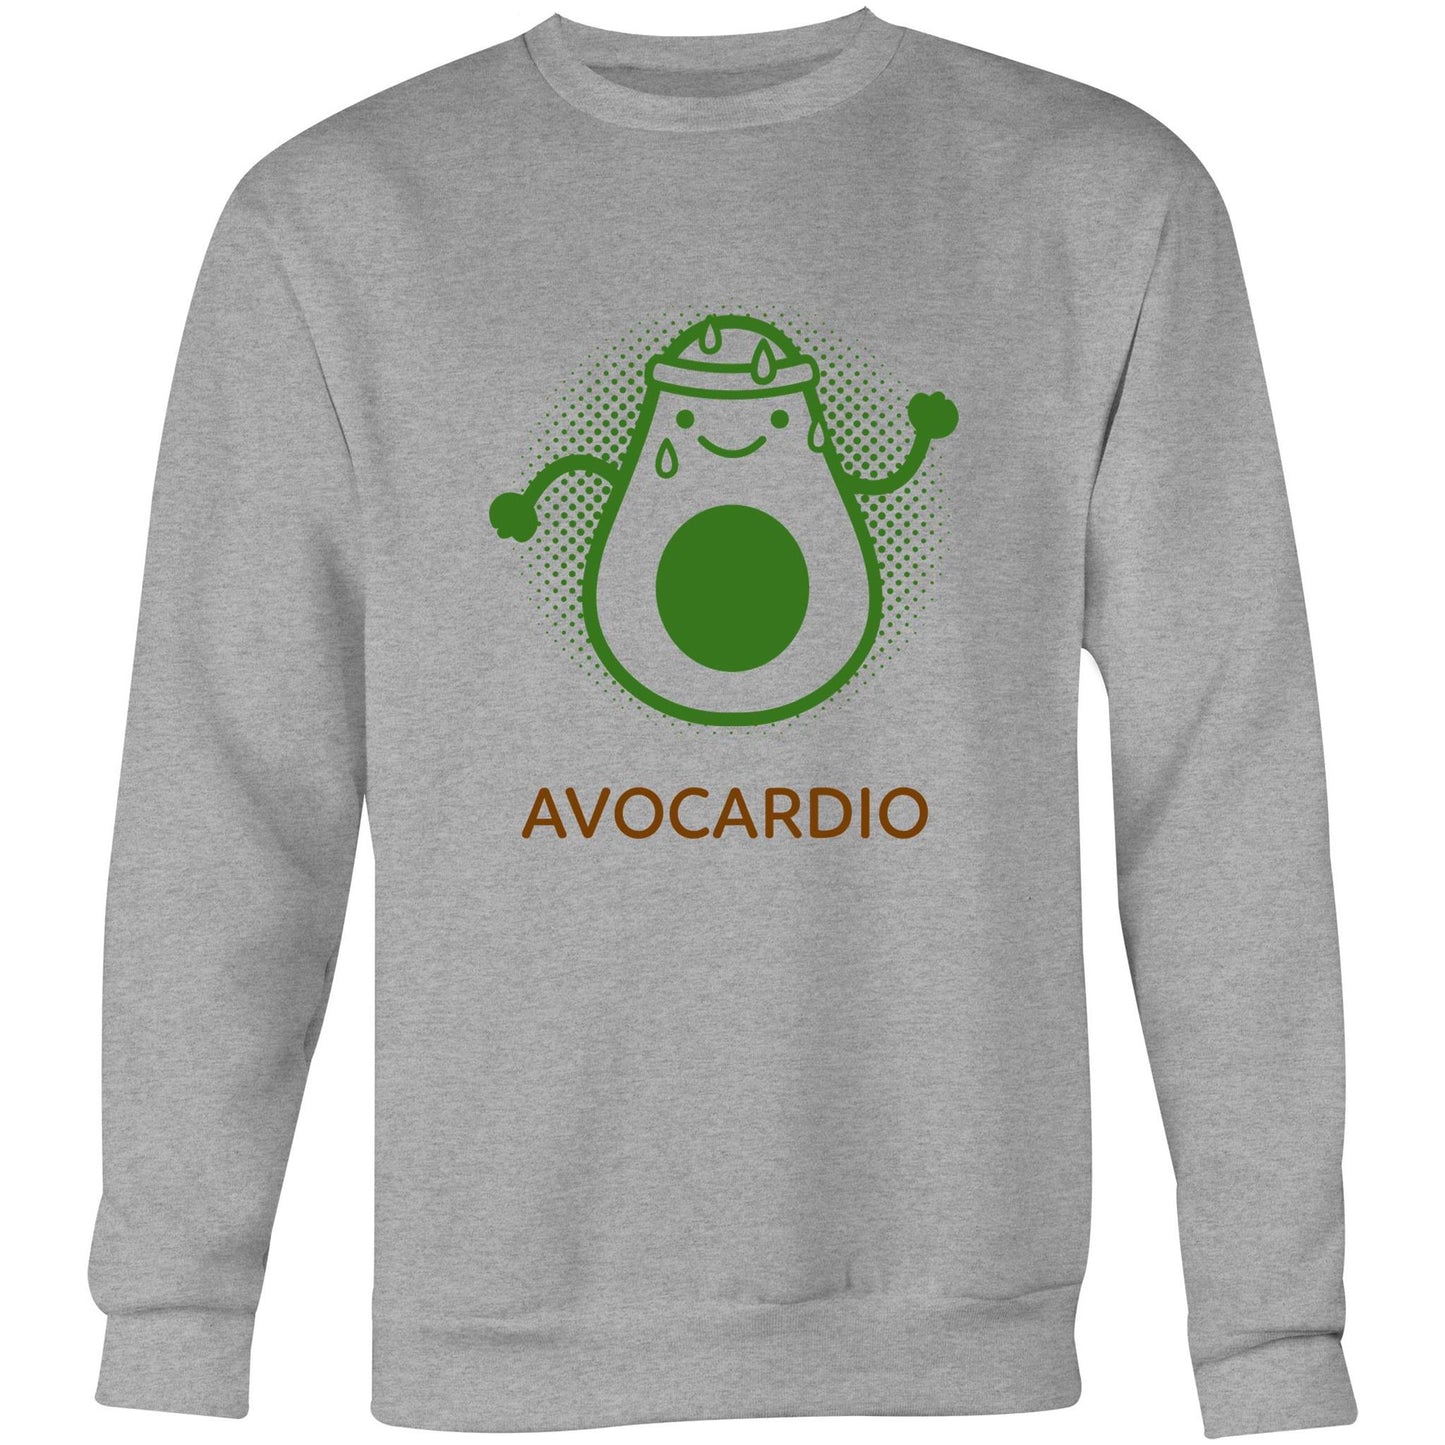 Avocardio - Crew Sweatshirt Grey Marle Sweatshirt Mens Womens